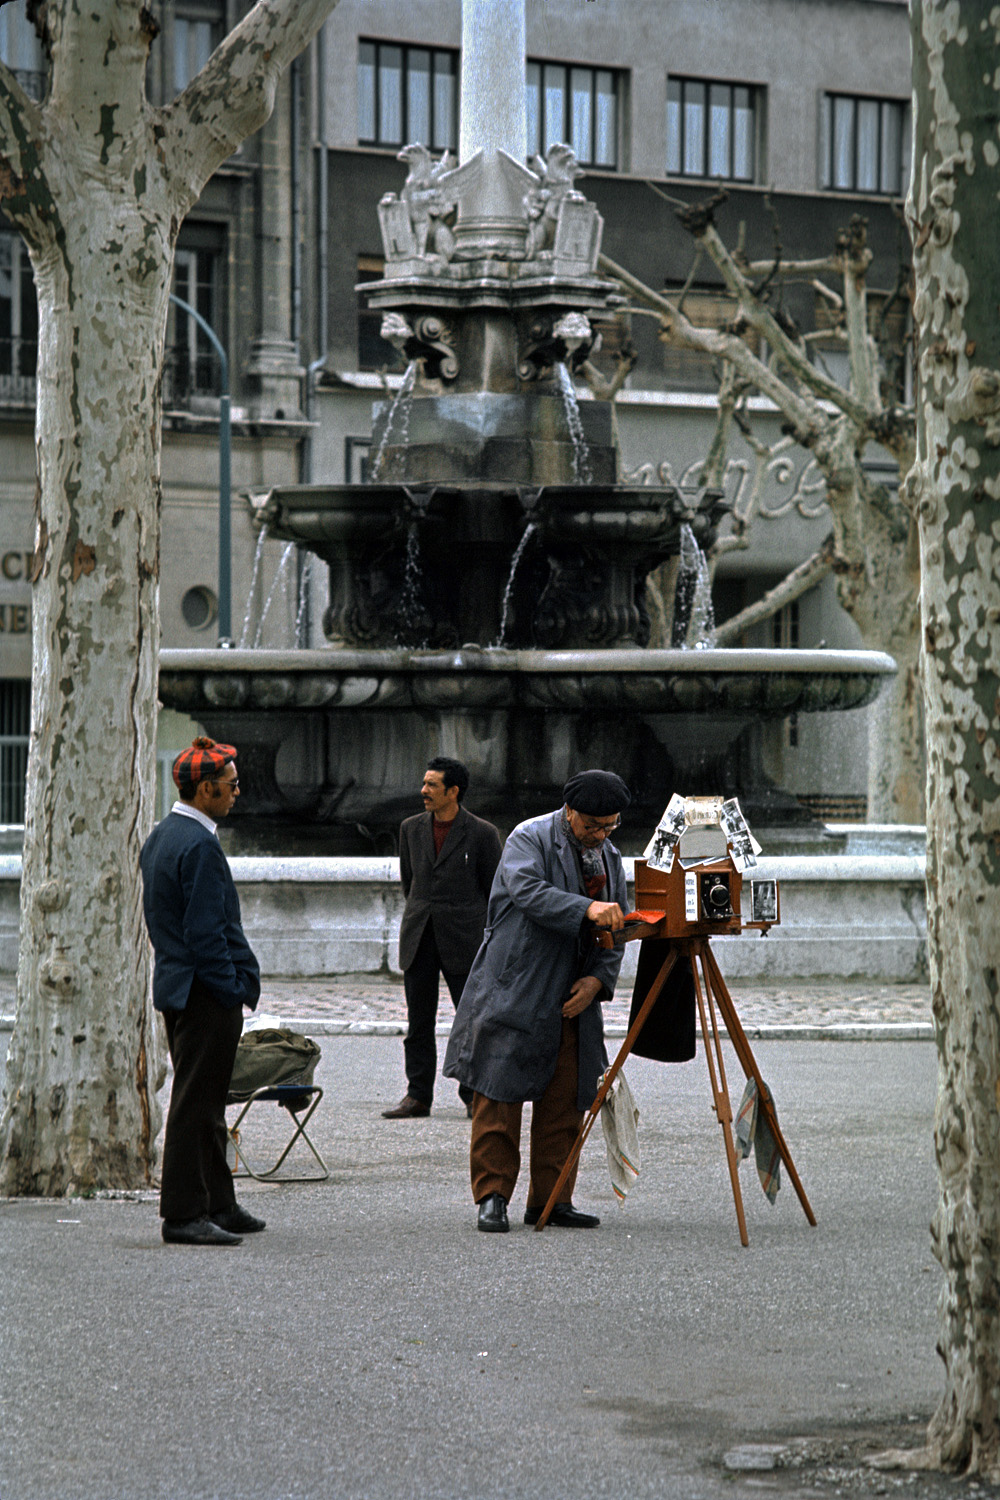 bill-hocker-photographer-paris-france-1972